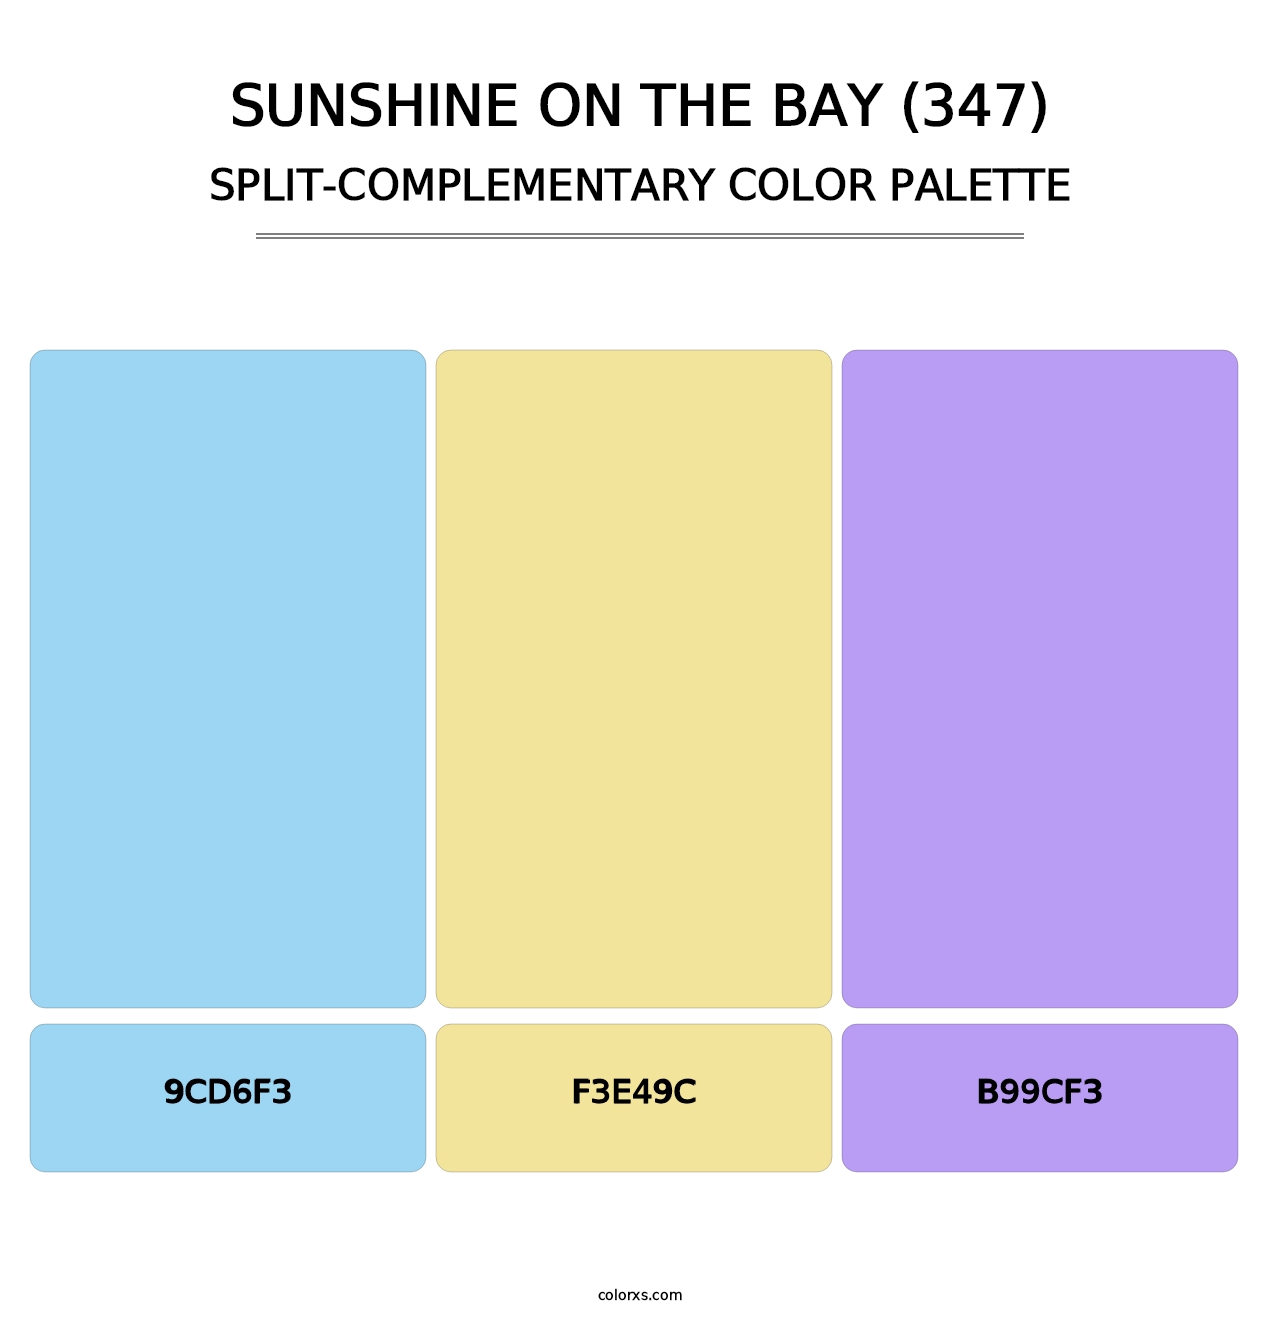 Sunshine on the Bay (347) - Split-Complementary Color Palette